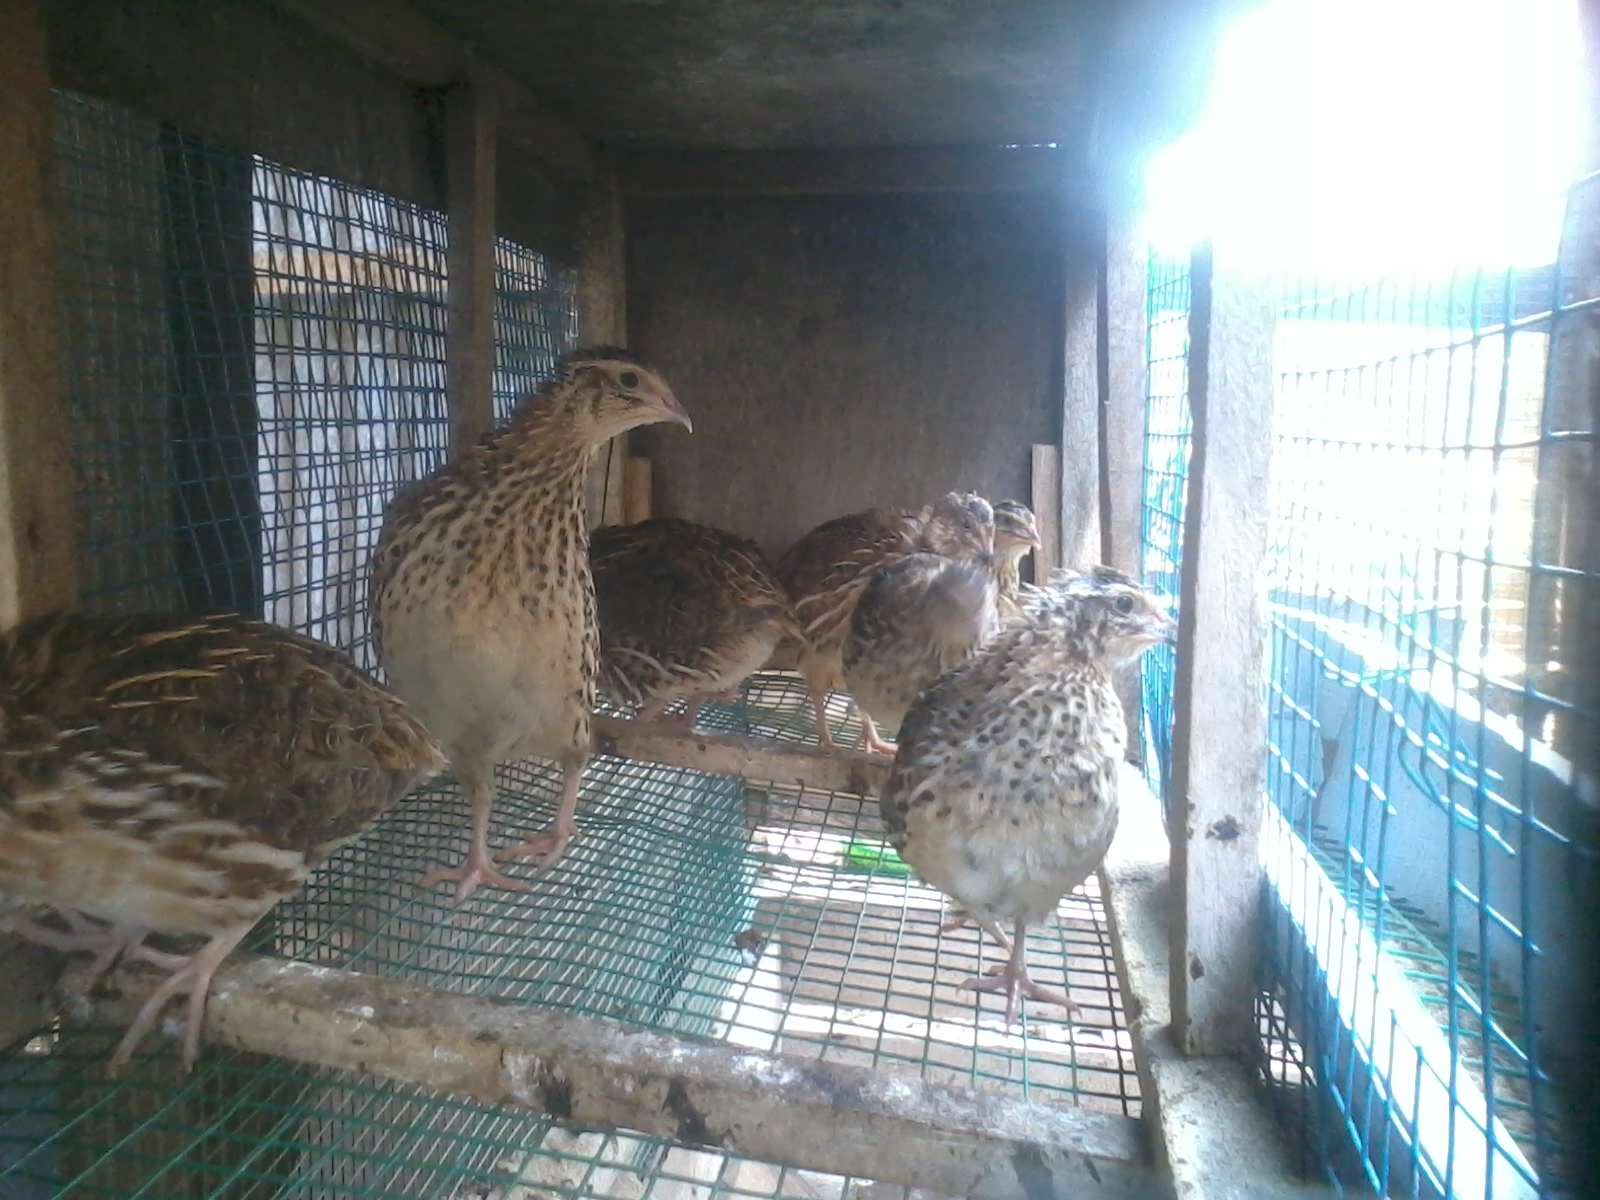 Finally i've got some quails to raise here in Ghana